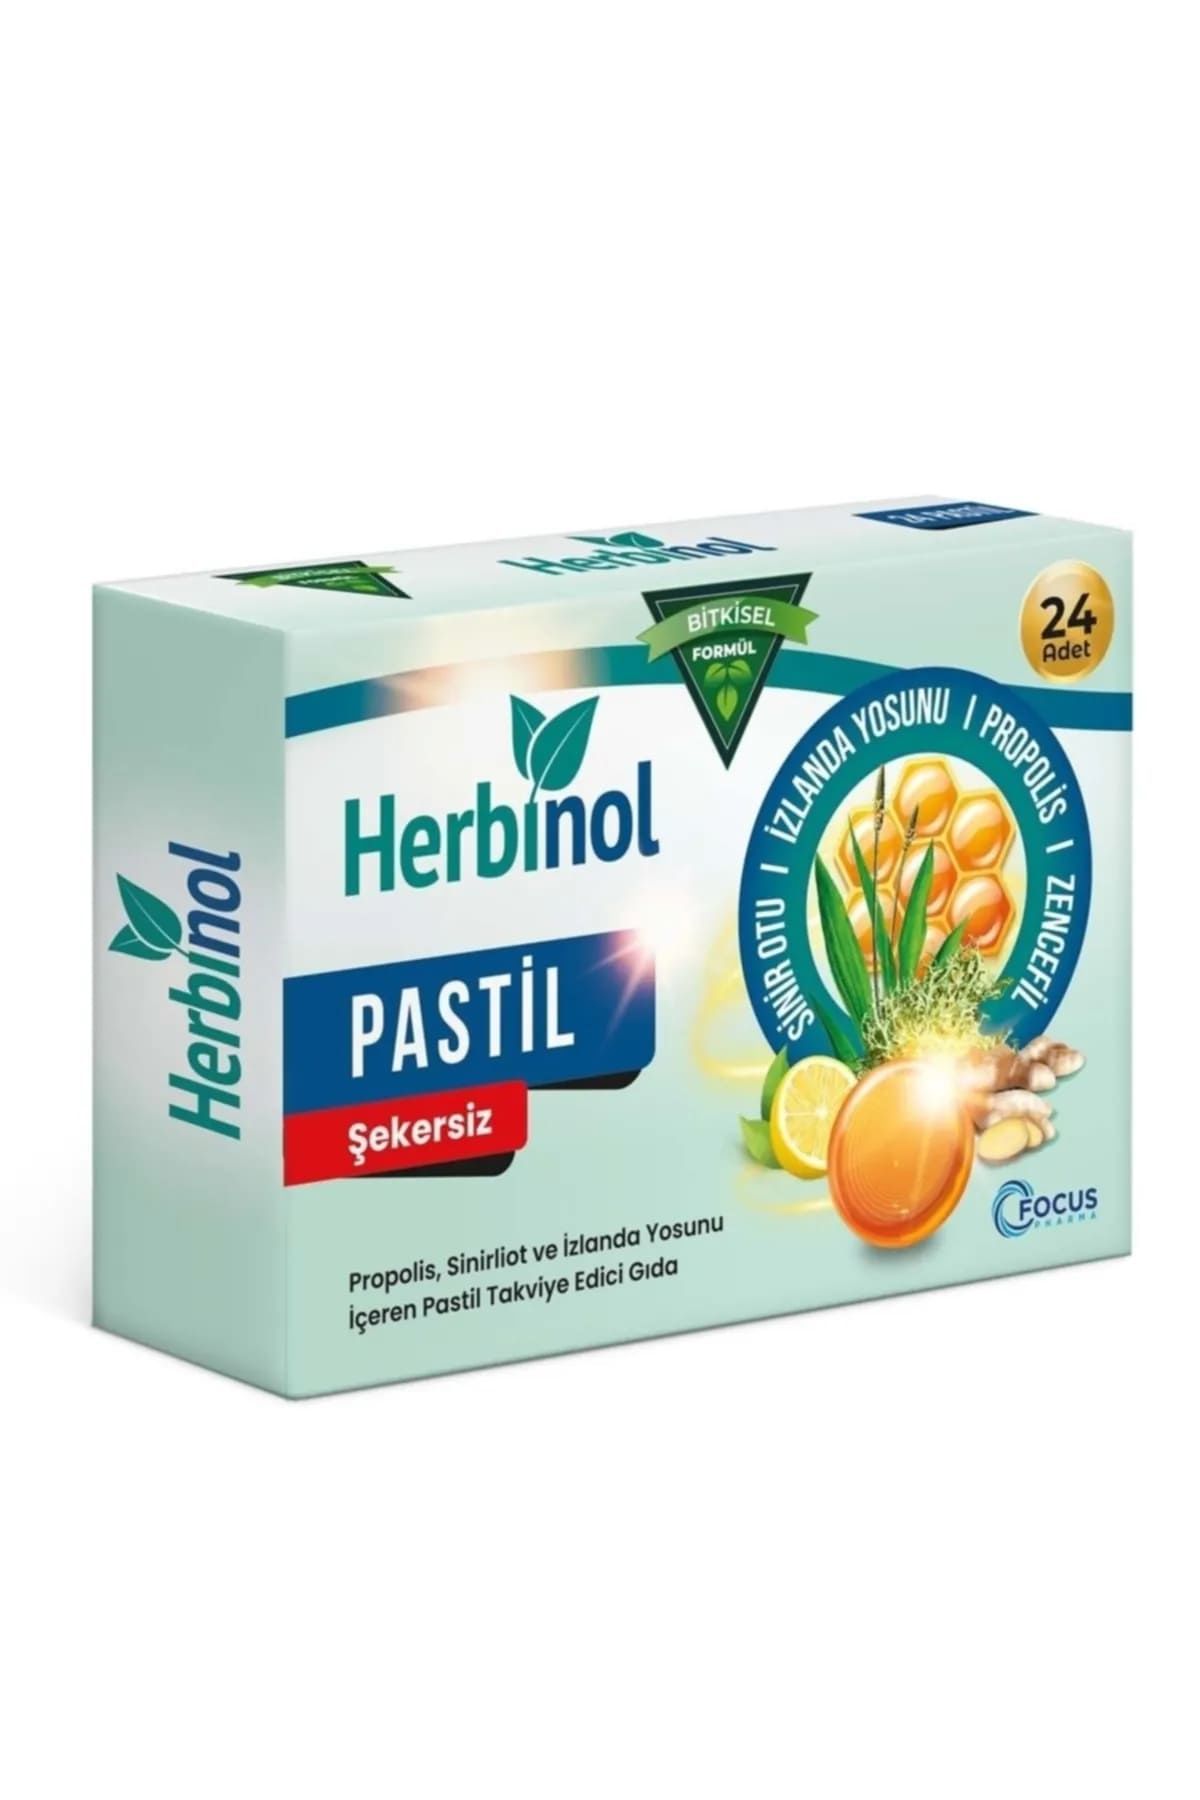 Focus Pharma Herbinol Pastil Şekersiz 24 Adet